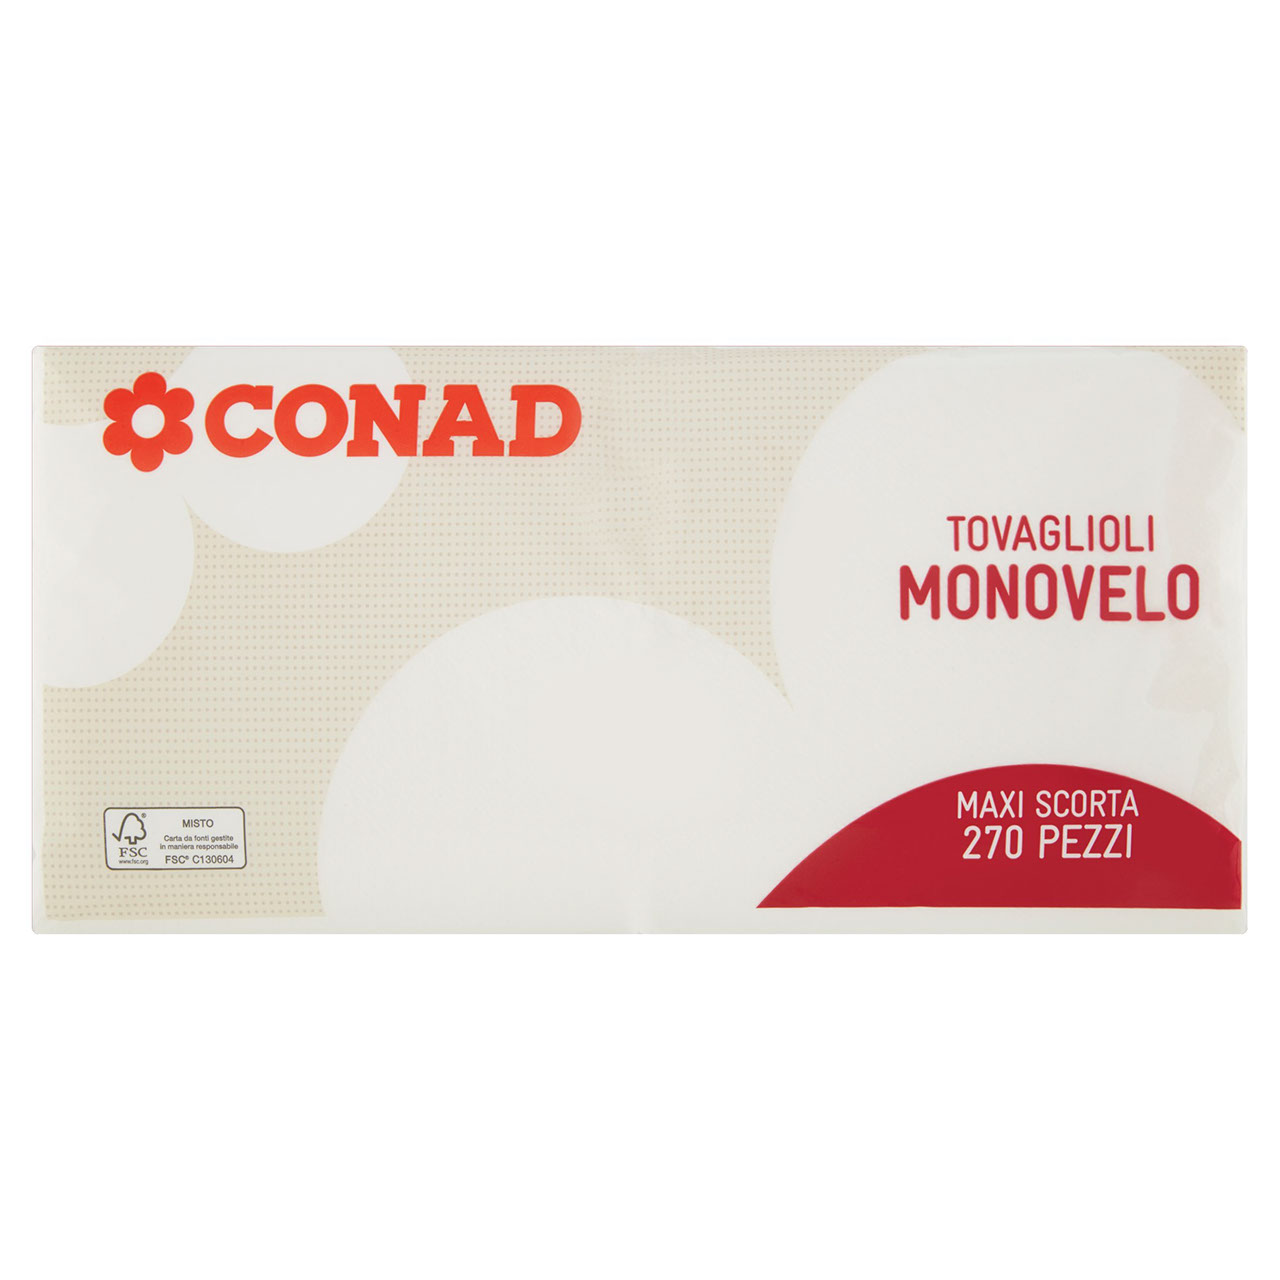 Tovaglioli Monovelo 270 pz Conad in vendita online